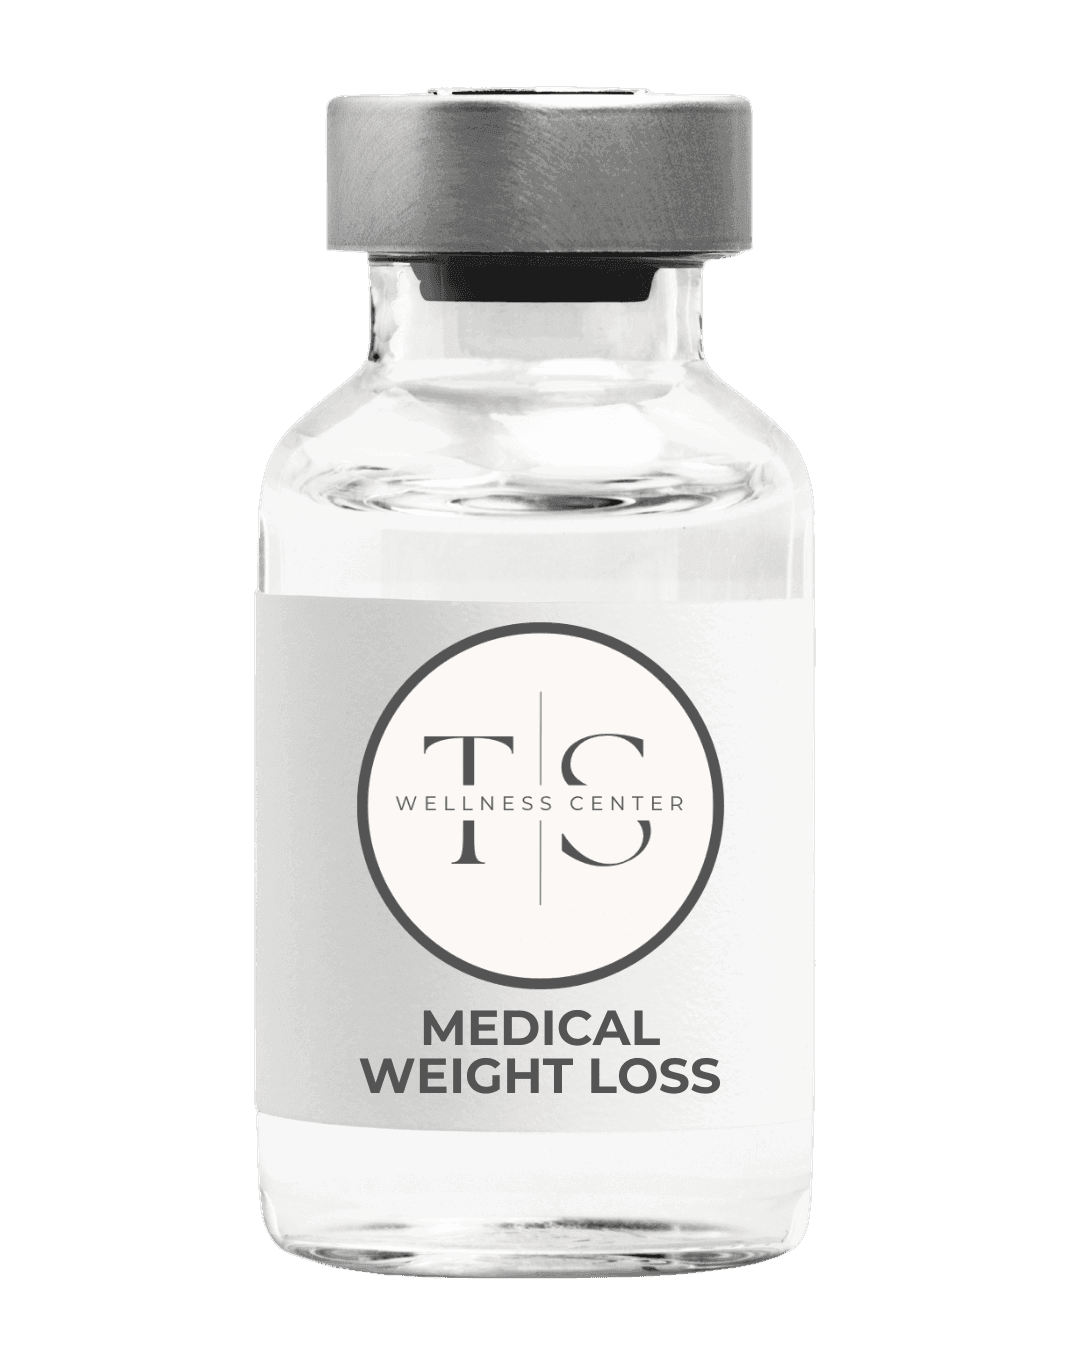 Medical weight loss